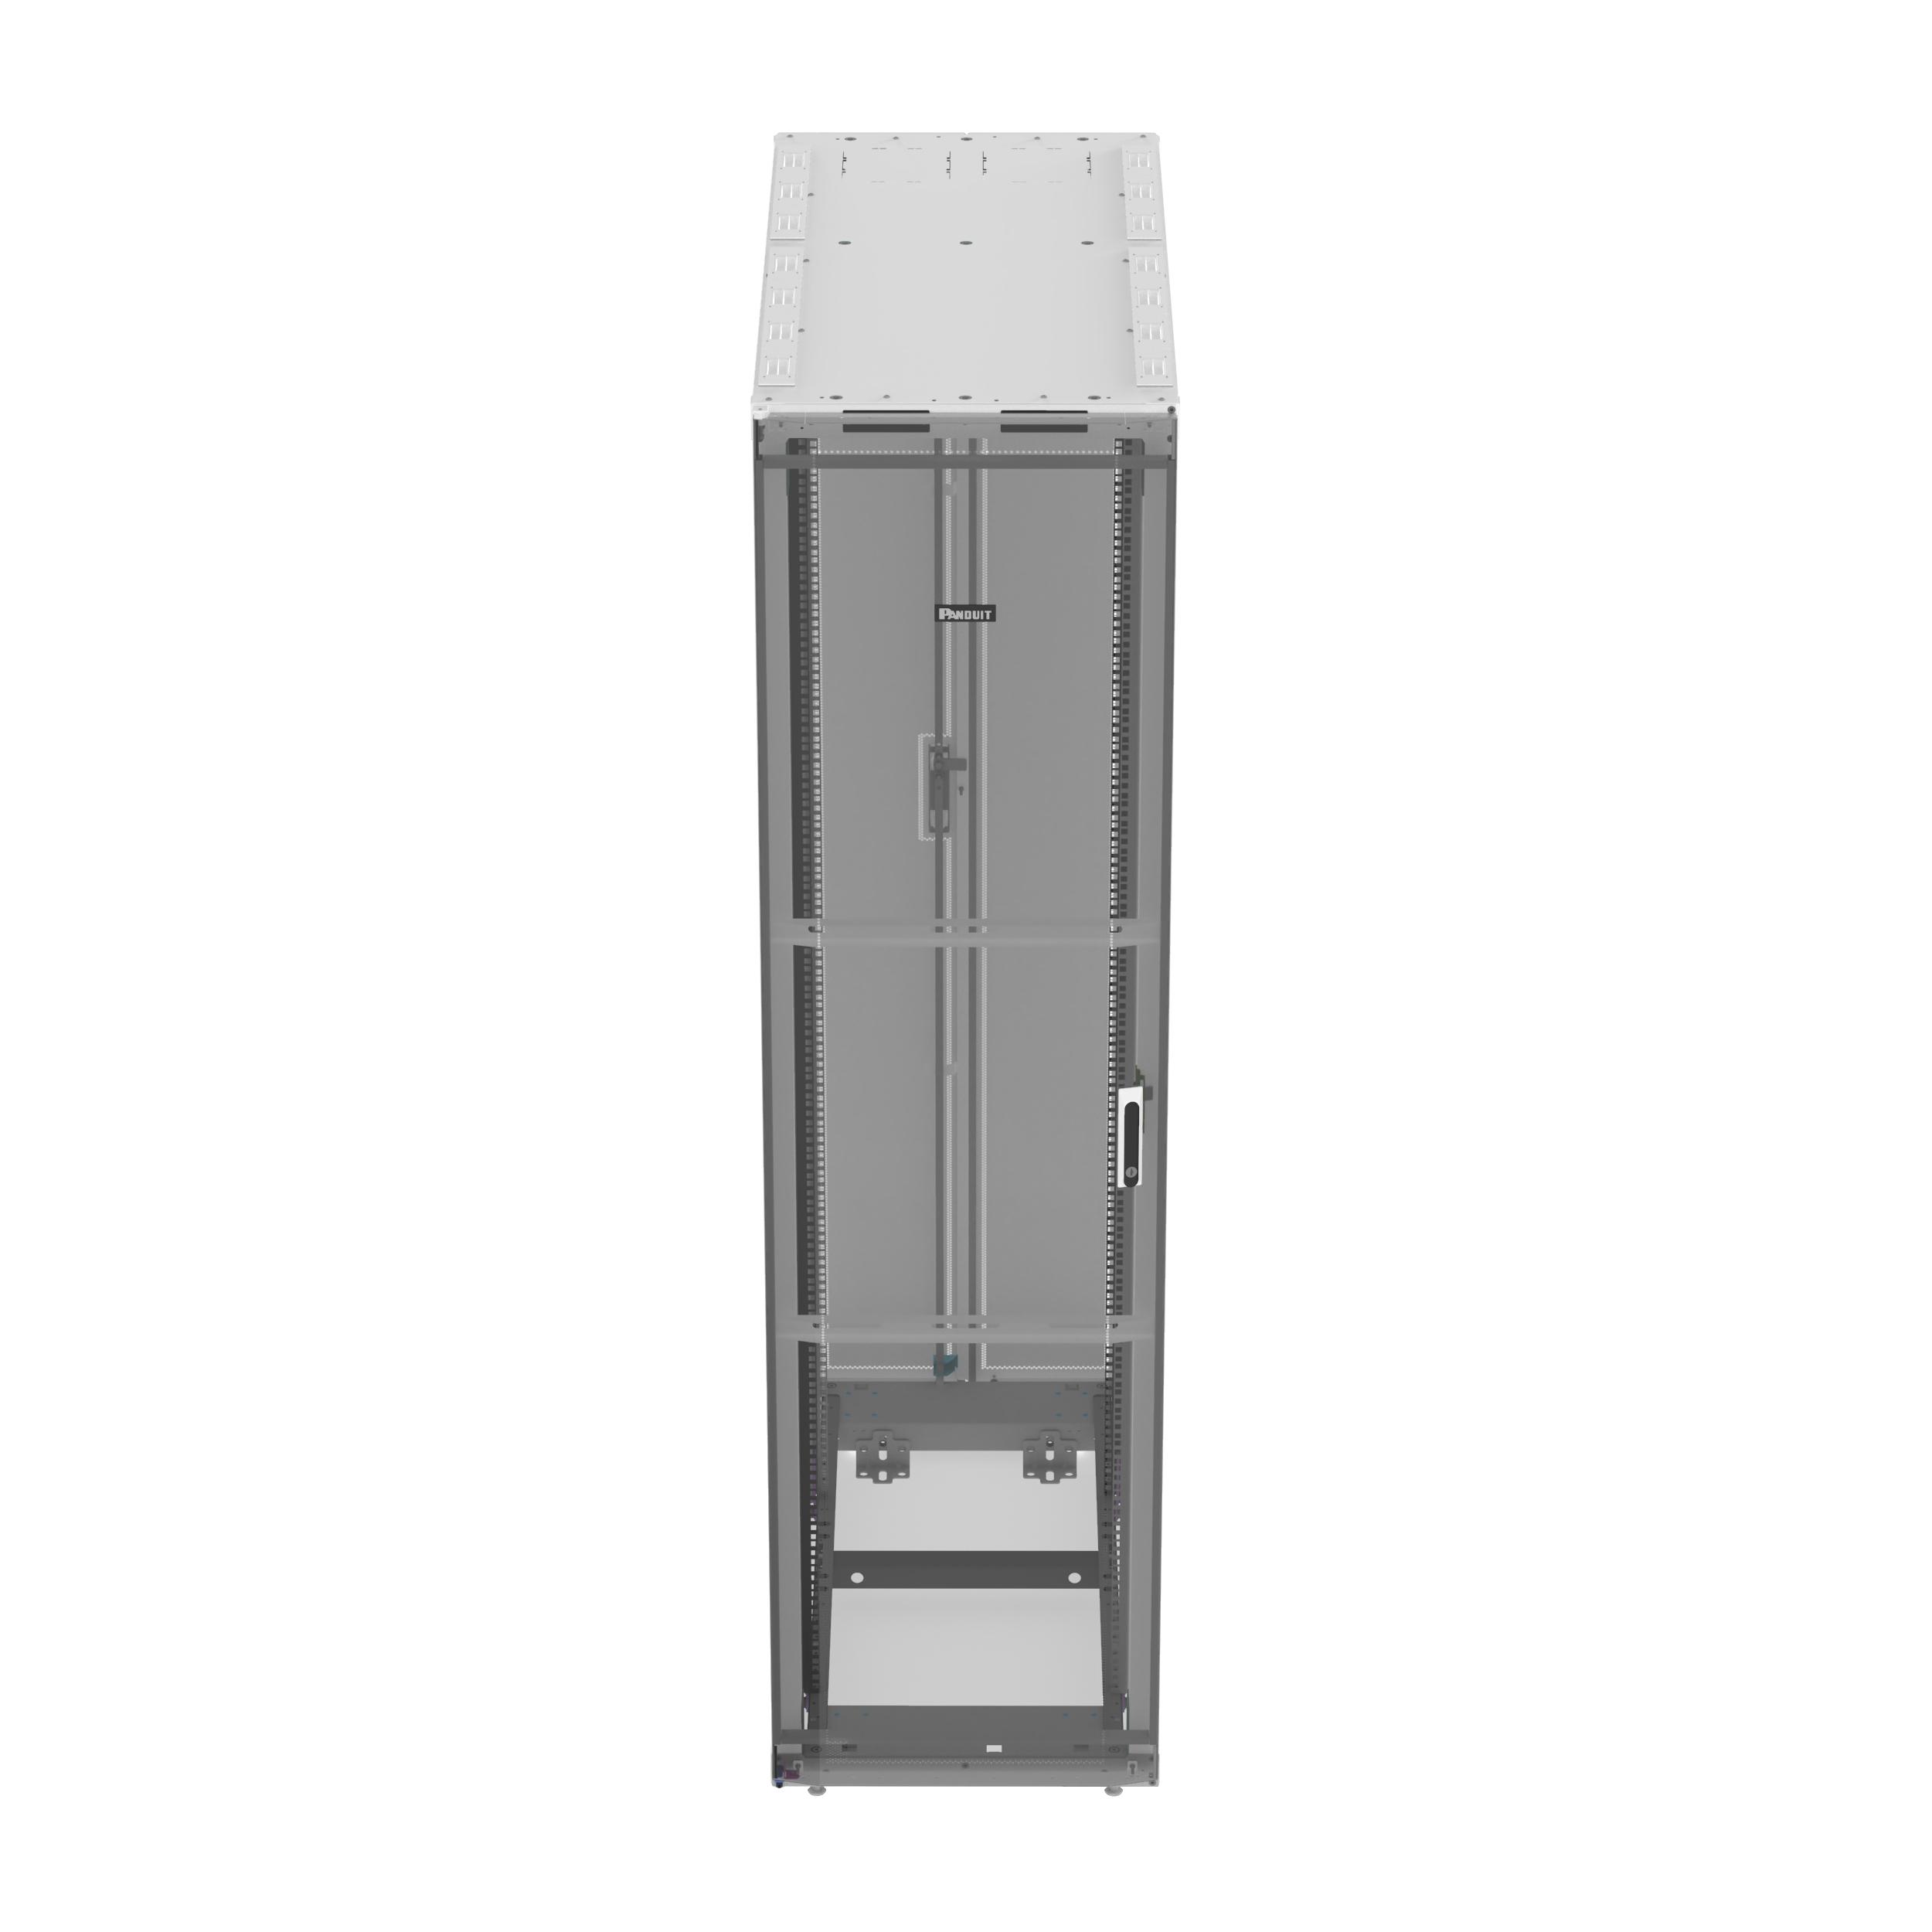 Panduit S6822WU Net-Access™ S-Type Server Cabinet, 48 RU, White